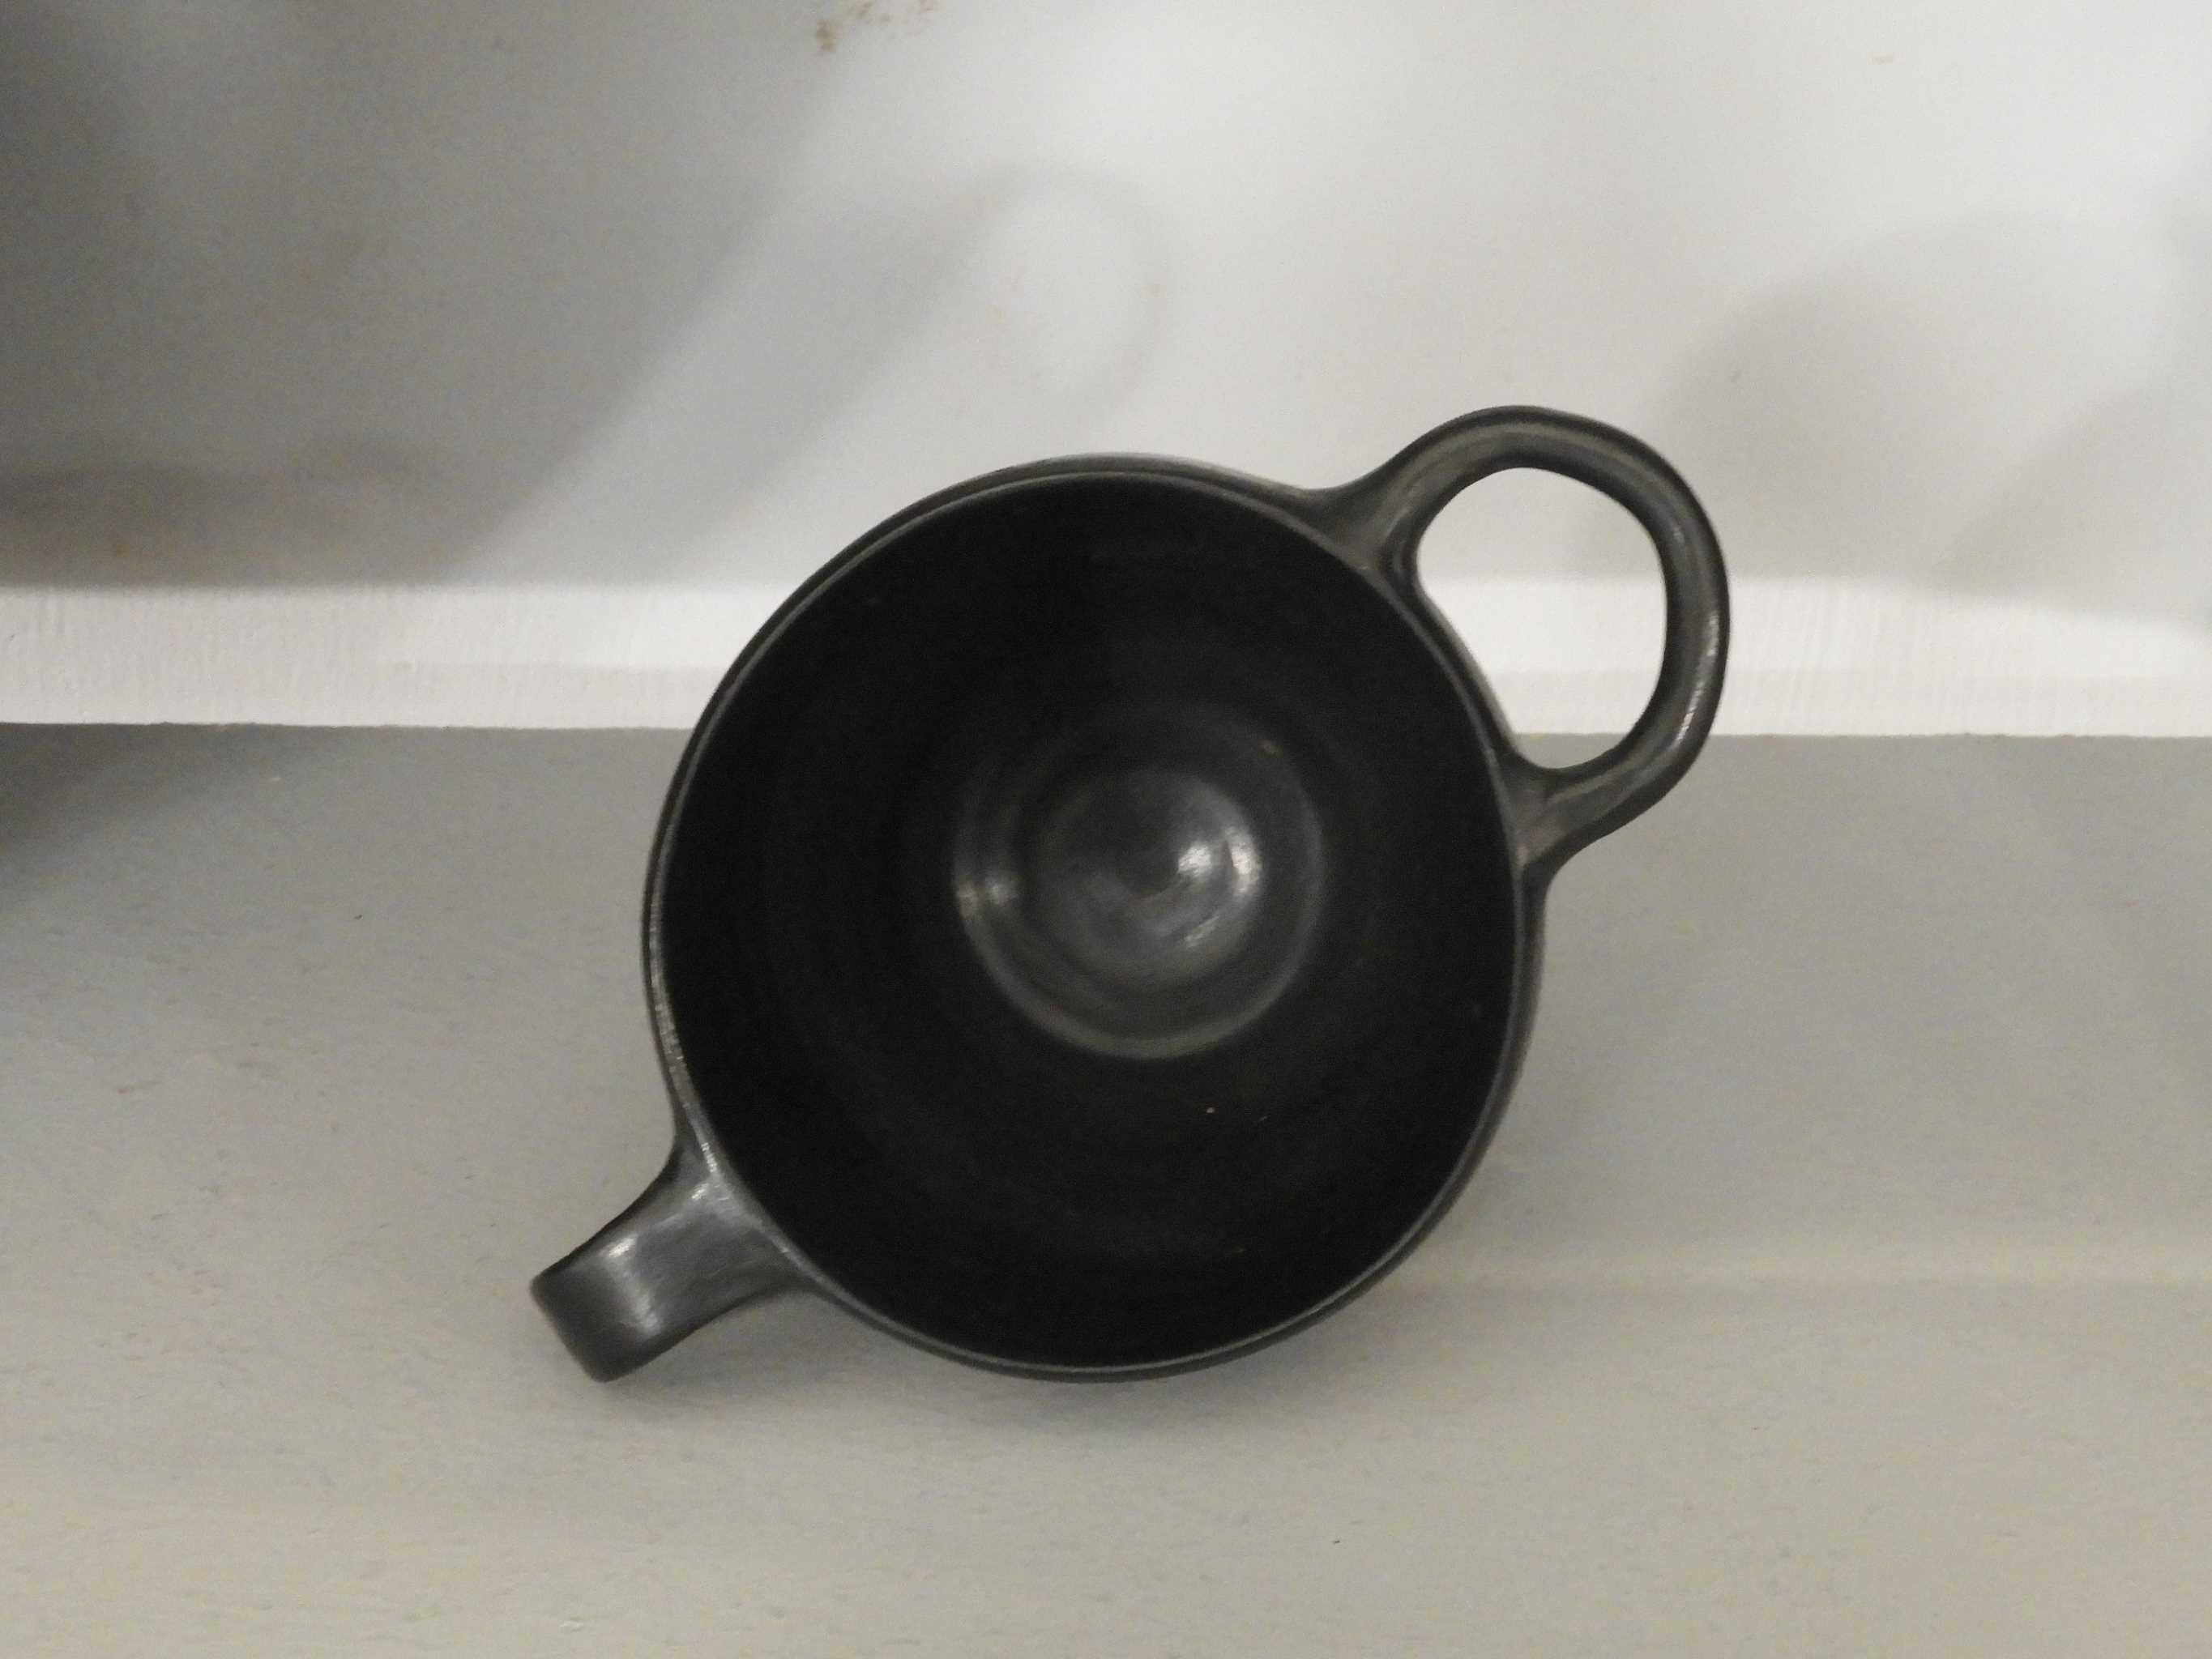 Decorated mug - type B